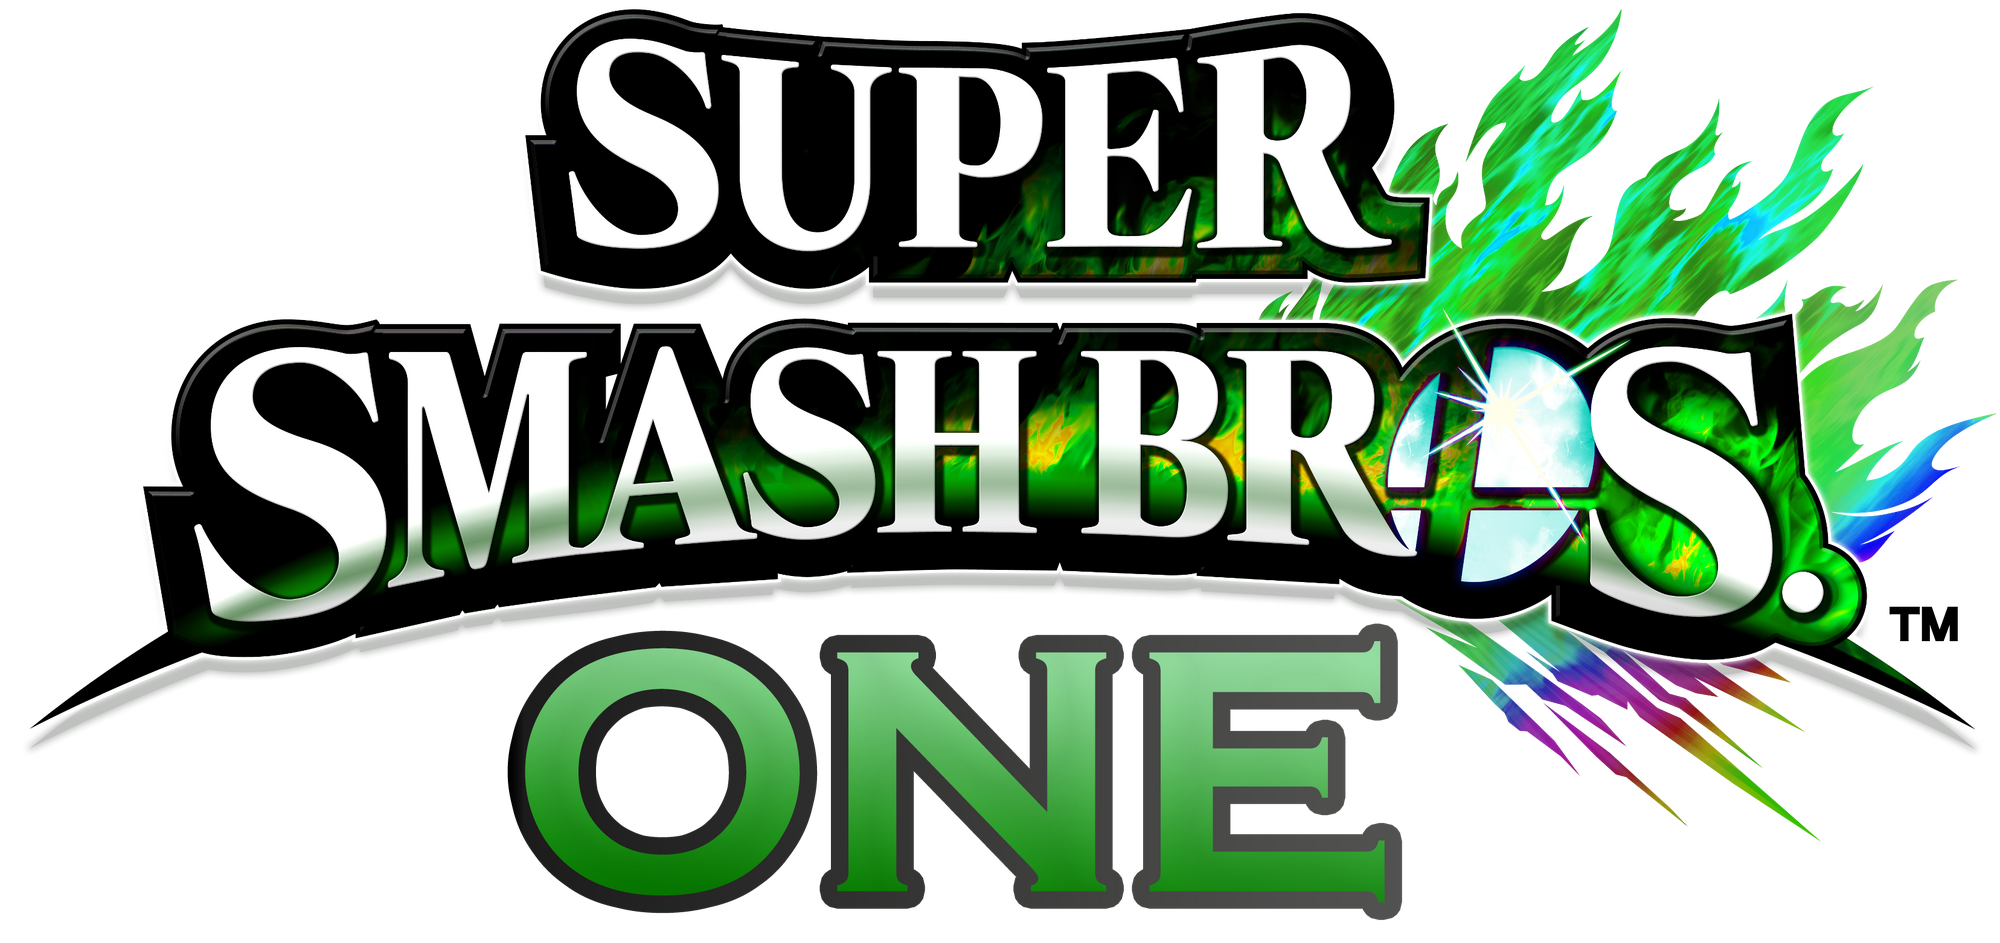 Super Smash Bros One Fantendo Nintendo Fanon Wiki Fandom Powered By Wikia 6095